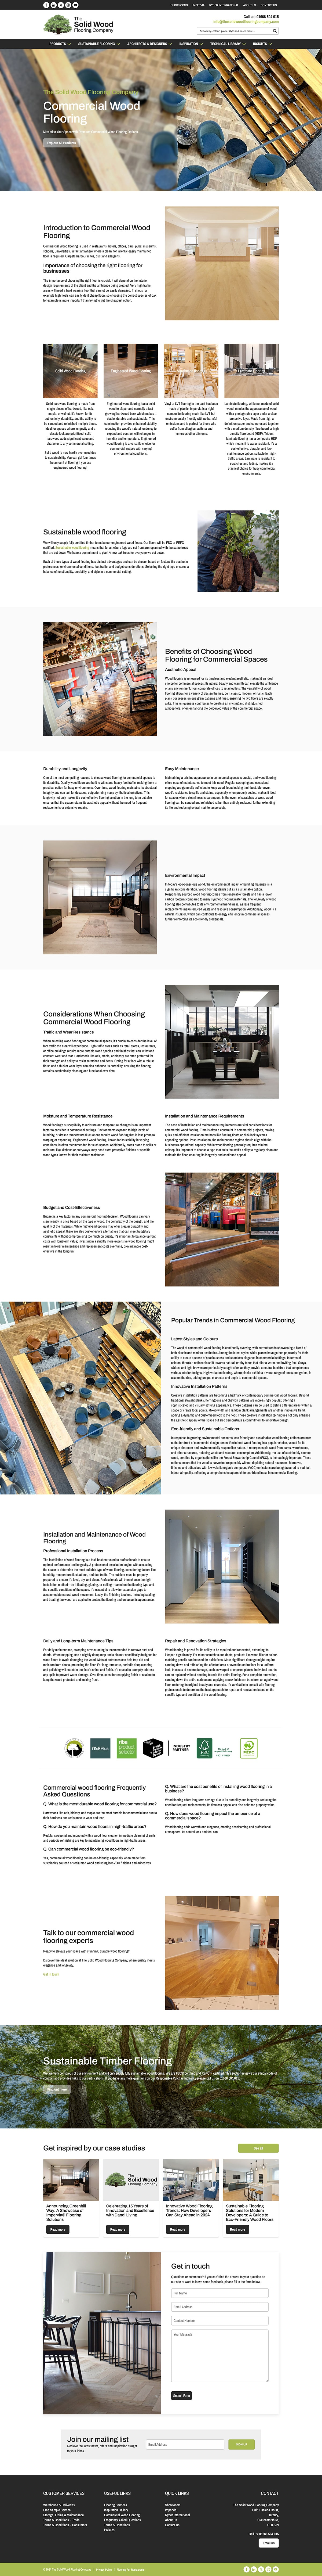 Bespoke WordPress design and build for wood flooring company